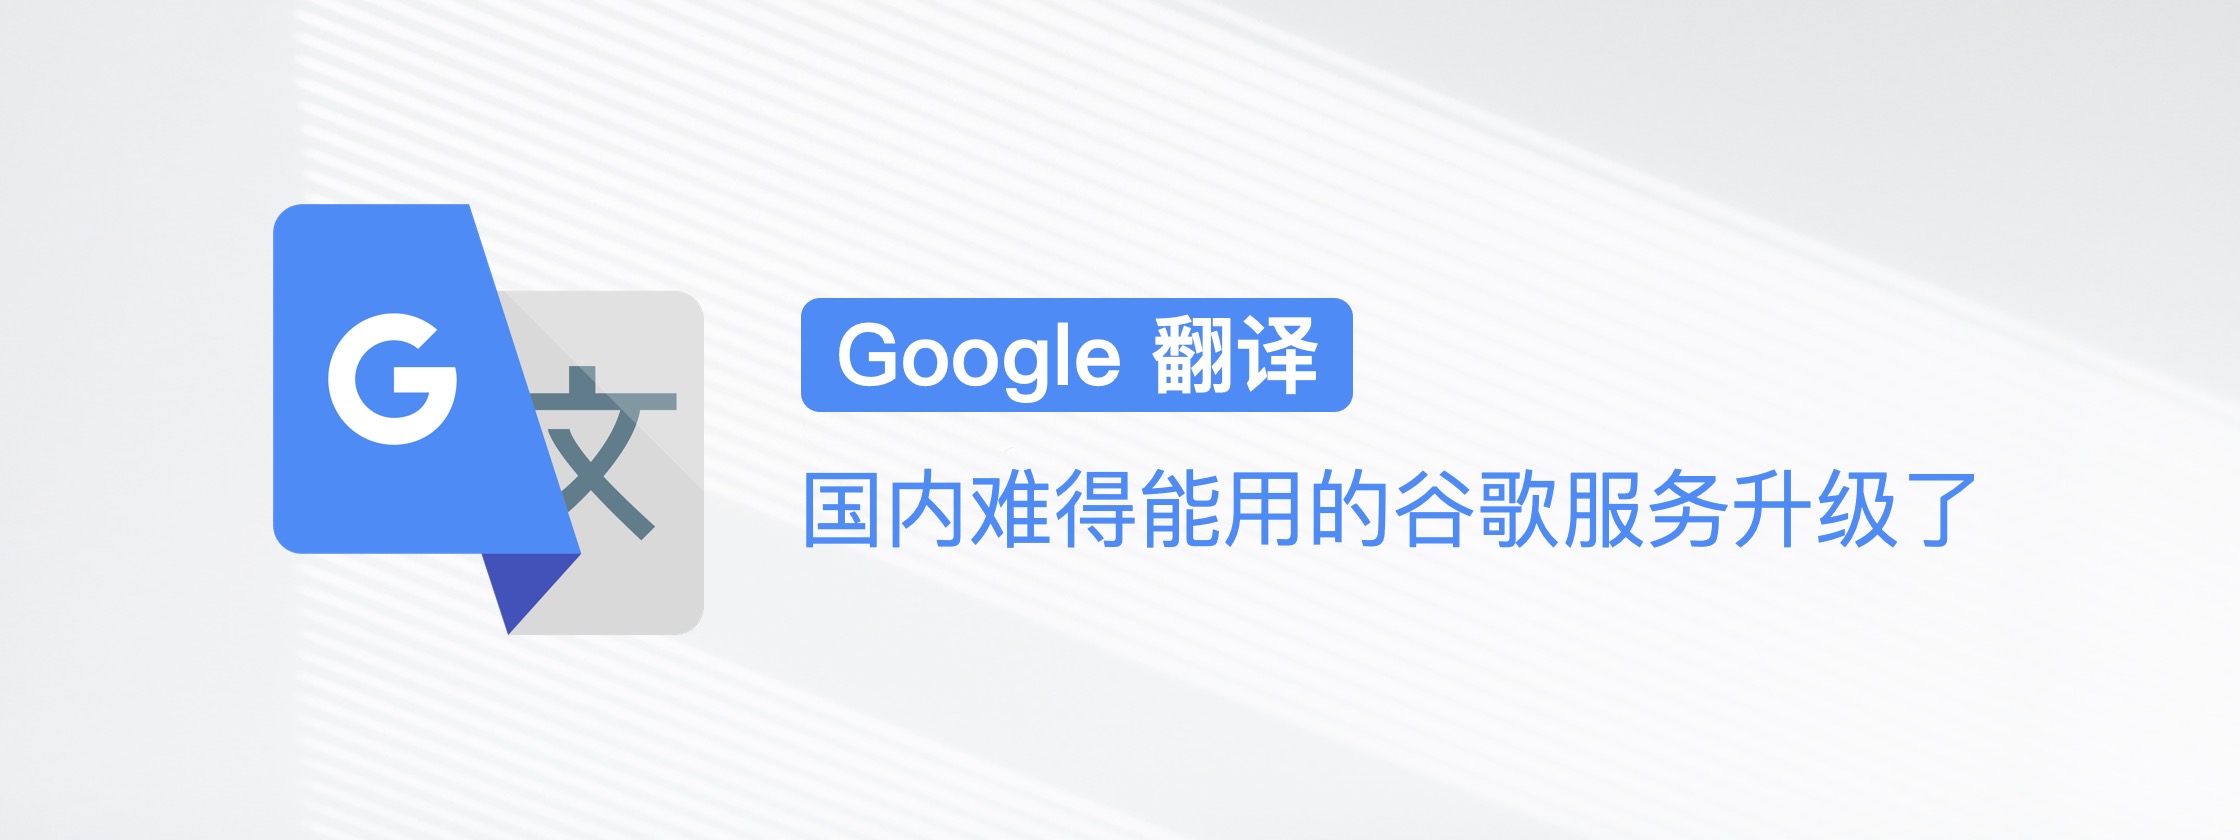 Google 翻译：国内难得能用的谷歌服务升级了